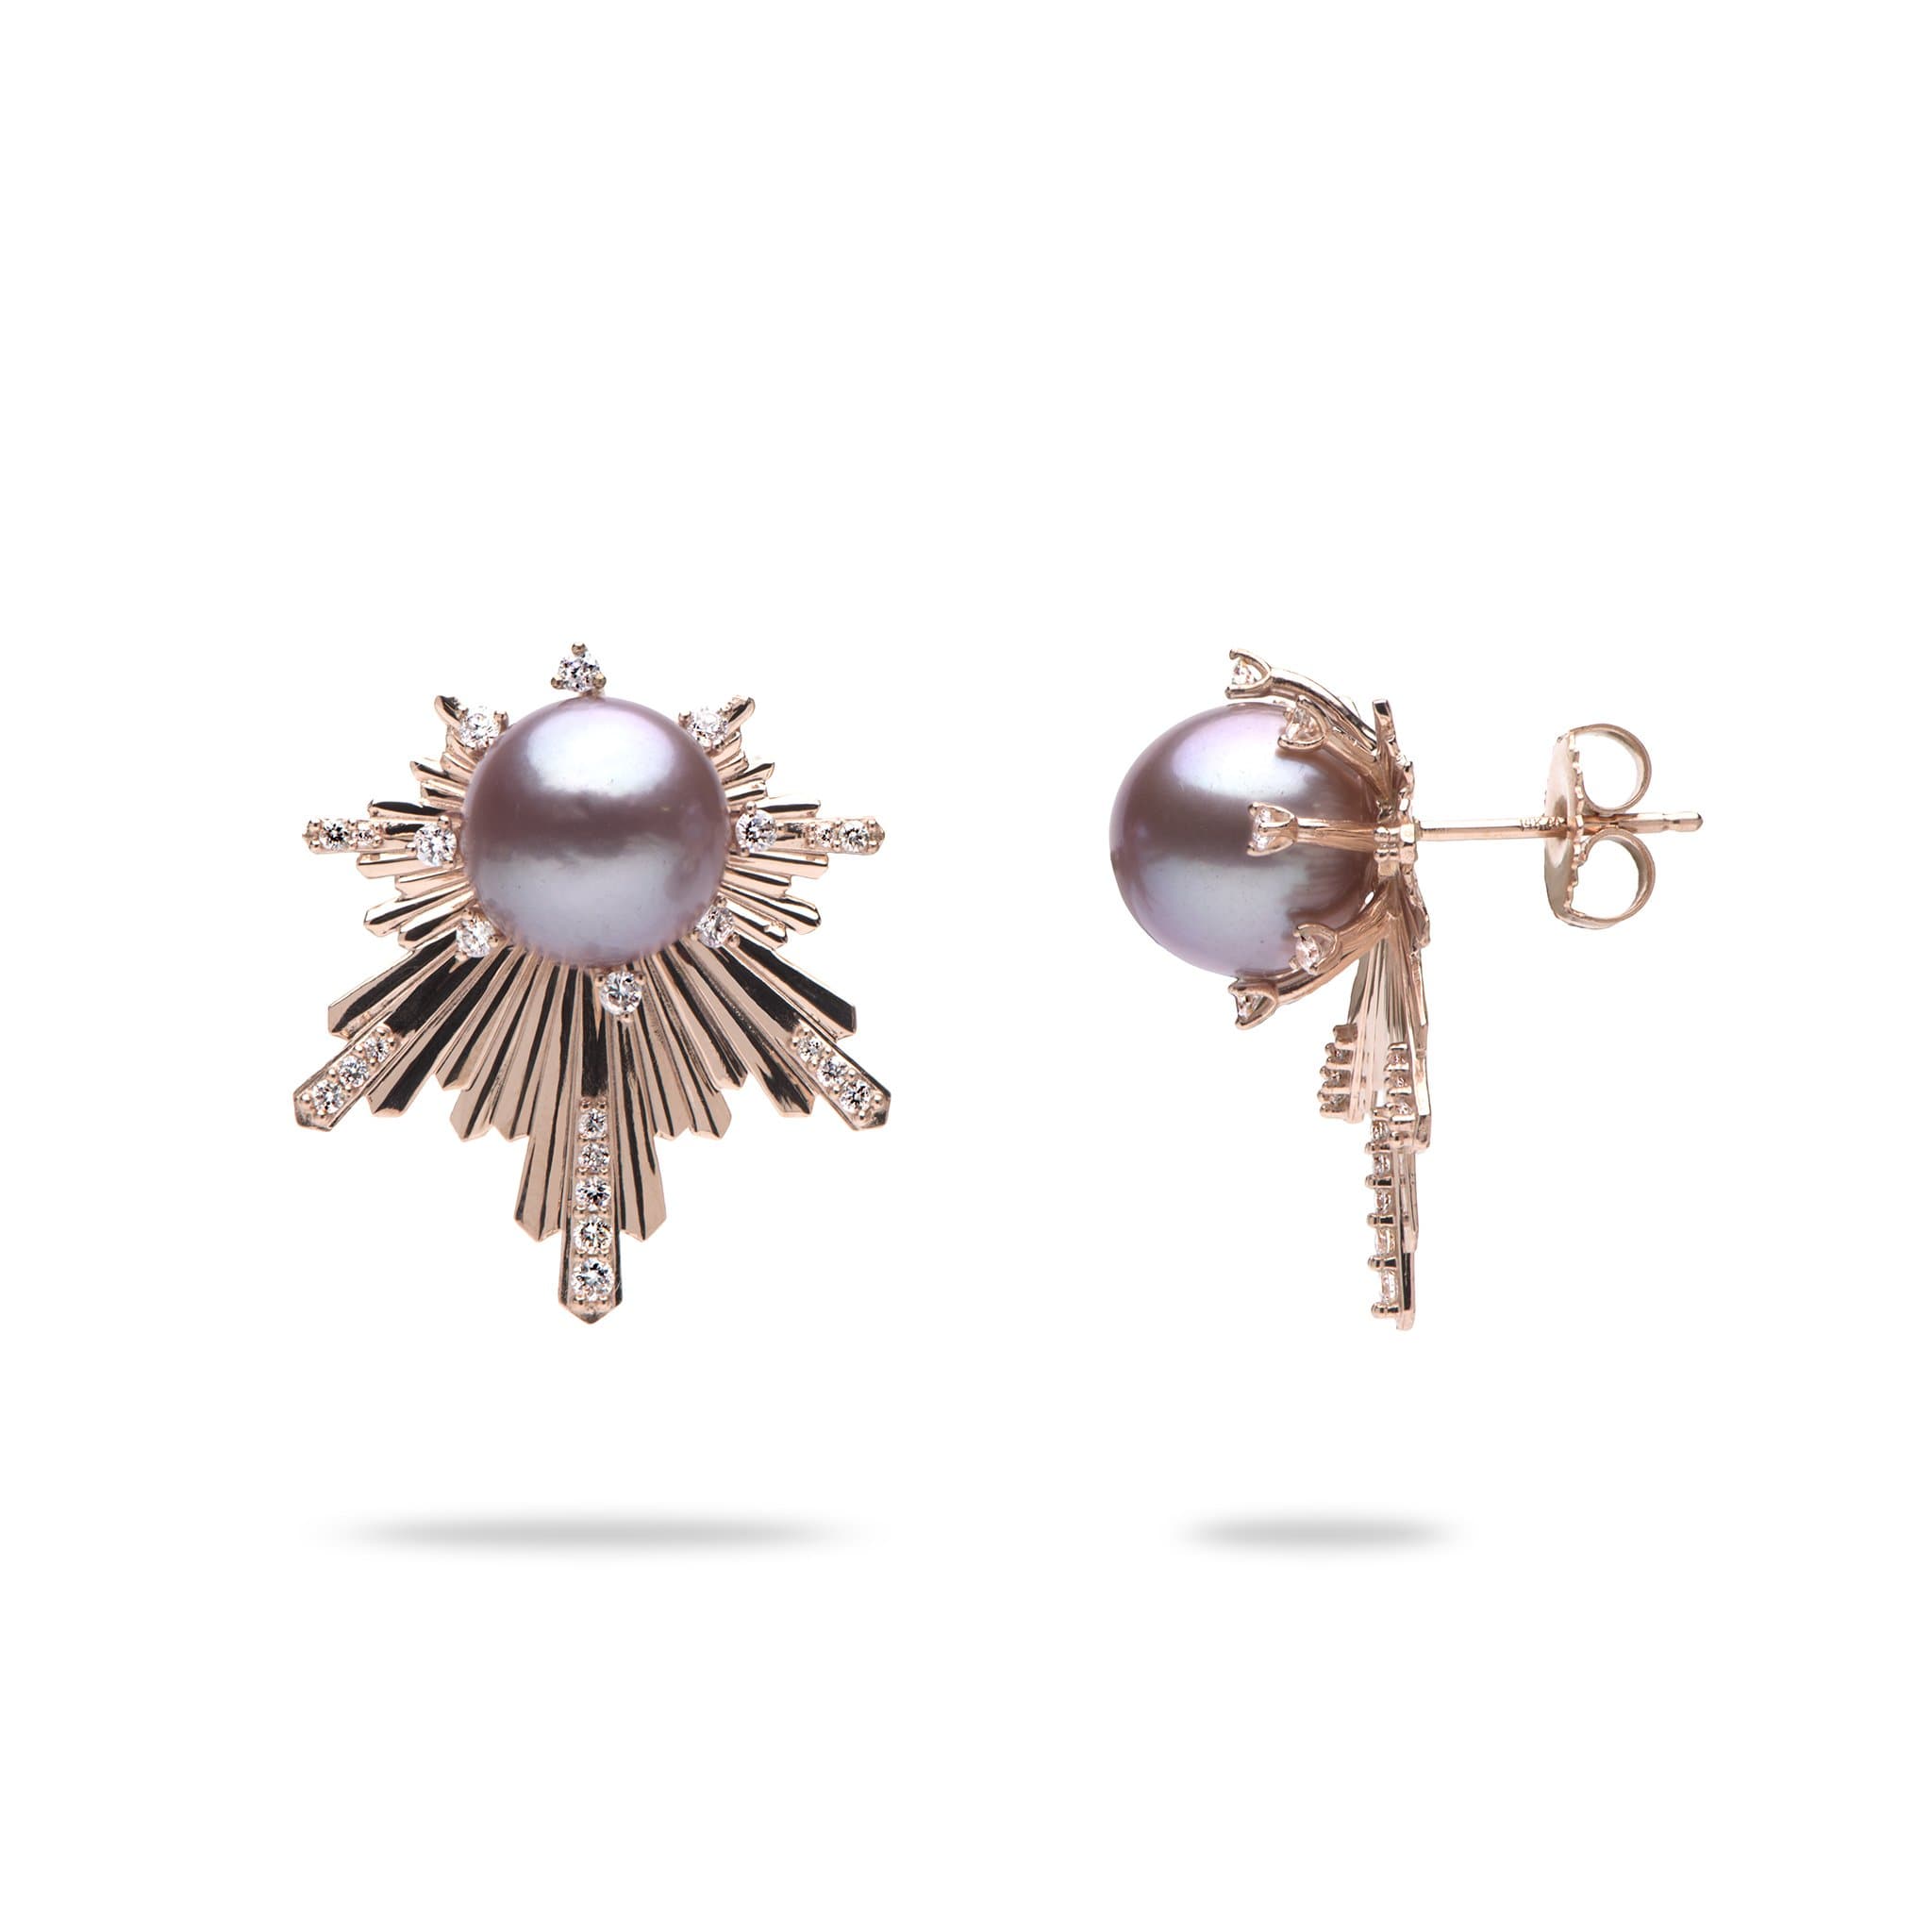 E Hoʻāla Lavender Freshwater Pearl Earrings in Rose Gold with Diamonds - 23mm